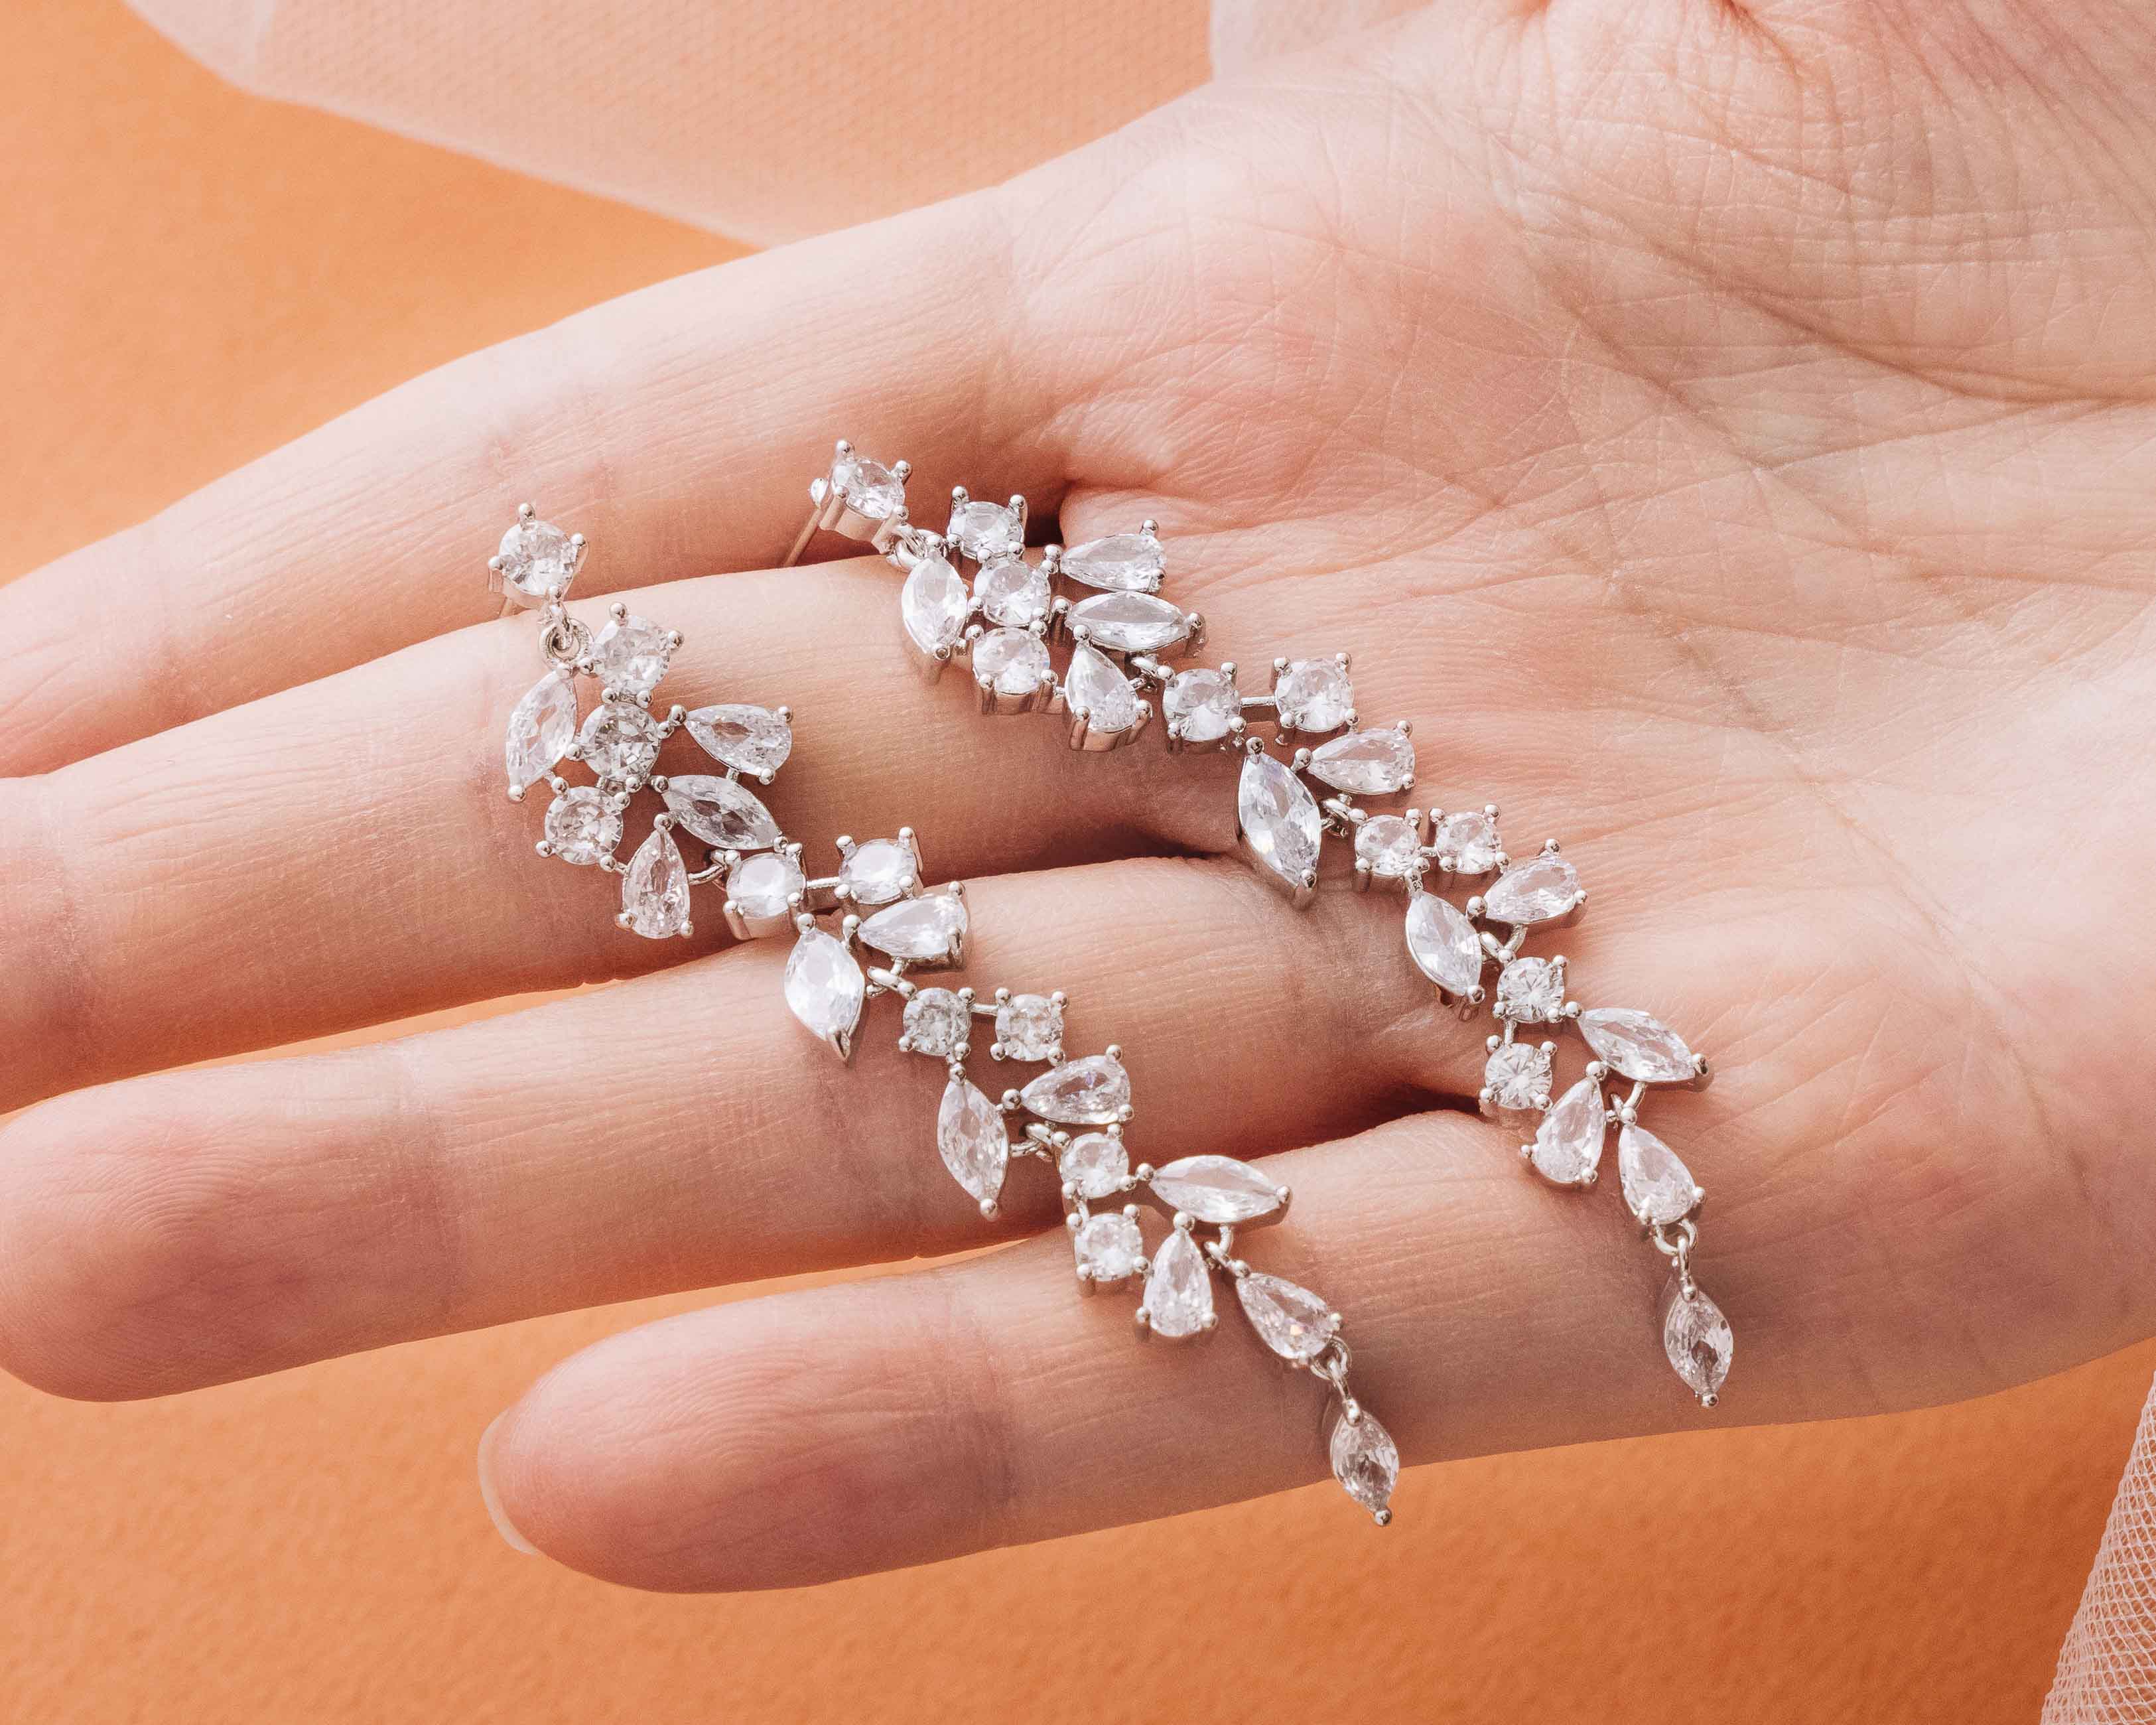 Silver Crystal Dangle Earrings - The perfect wedding earrings.